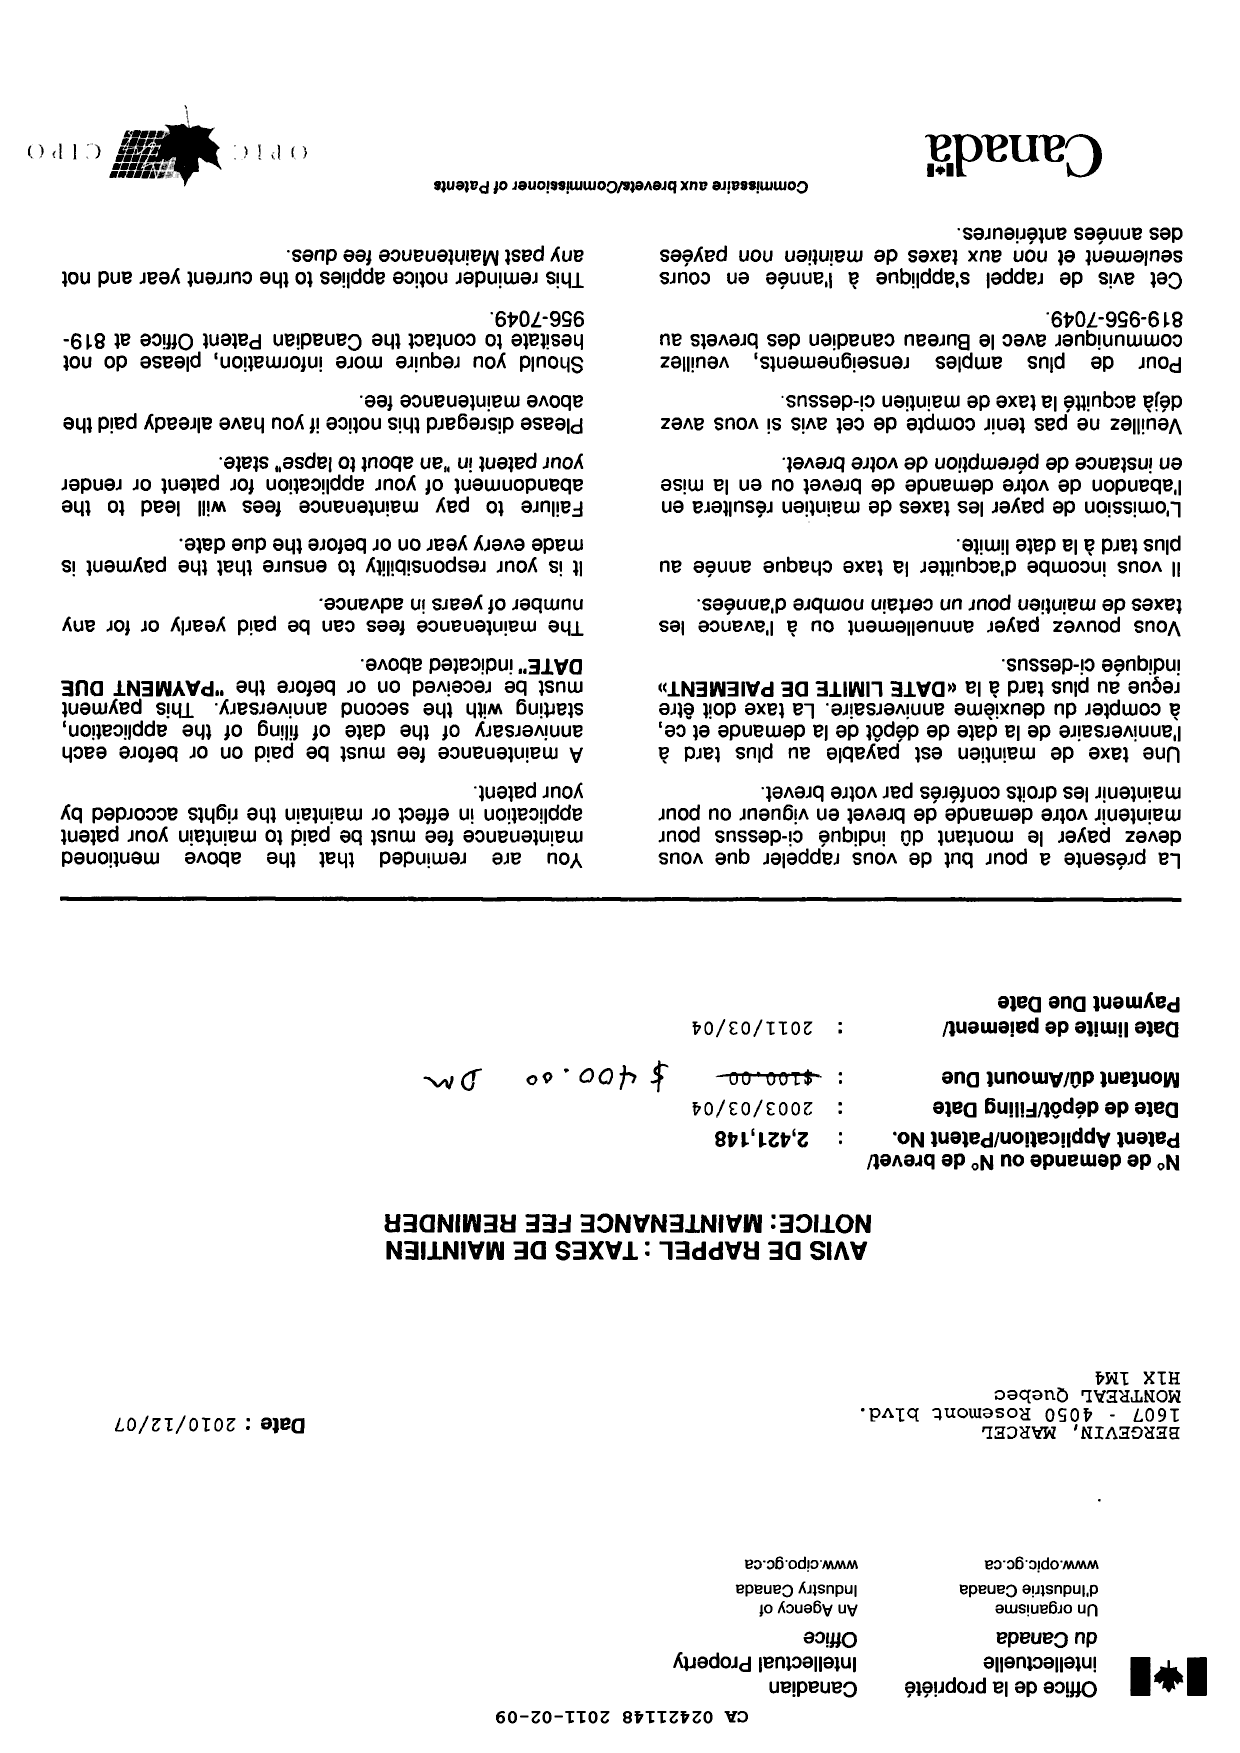 Canadian Patent Document 2421148. Correspondence 20101209. Image 1 of 4